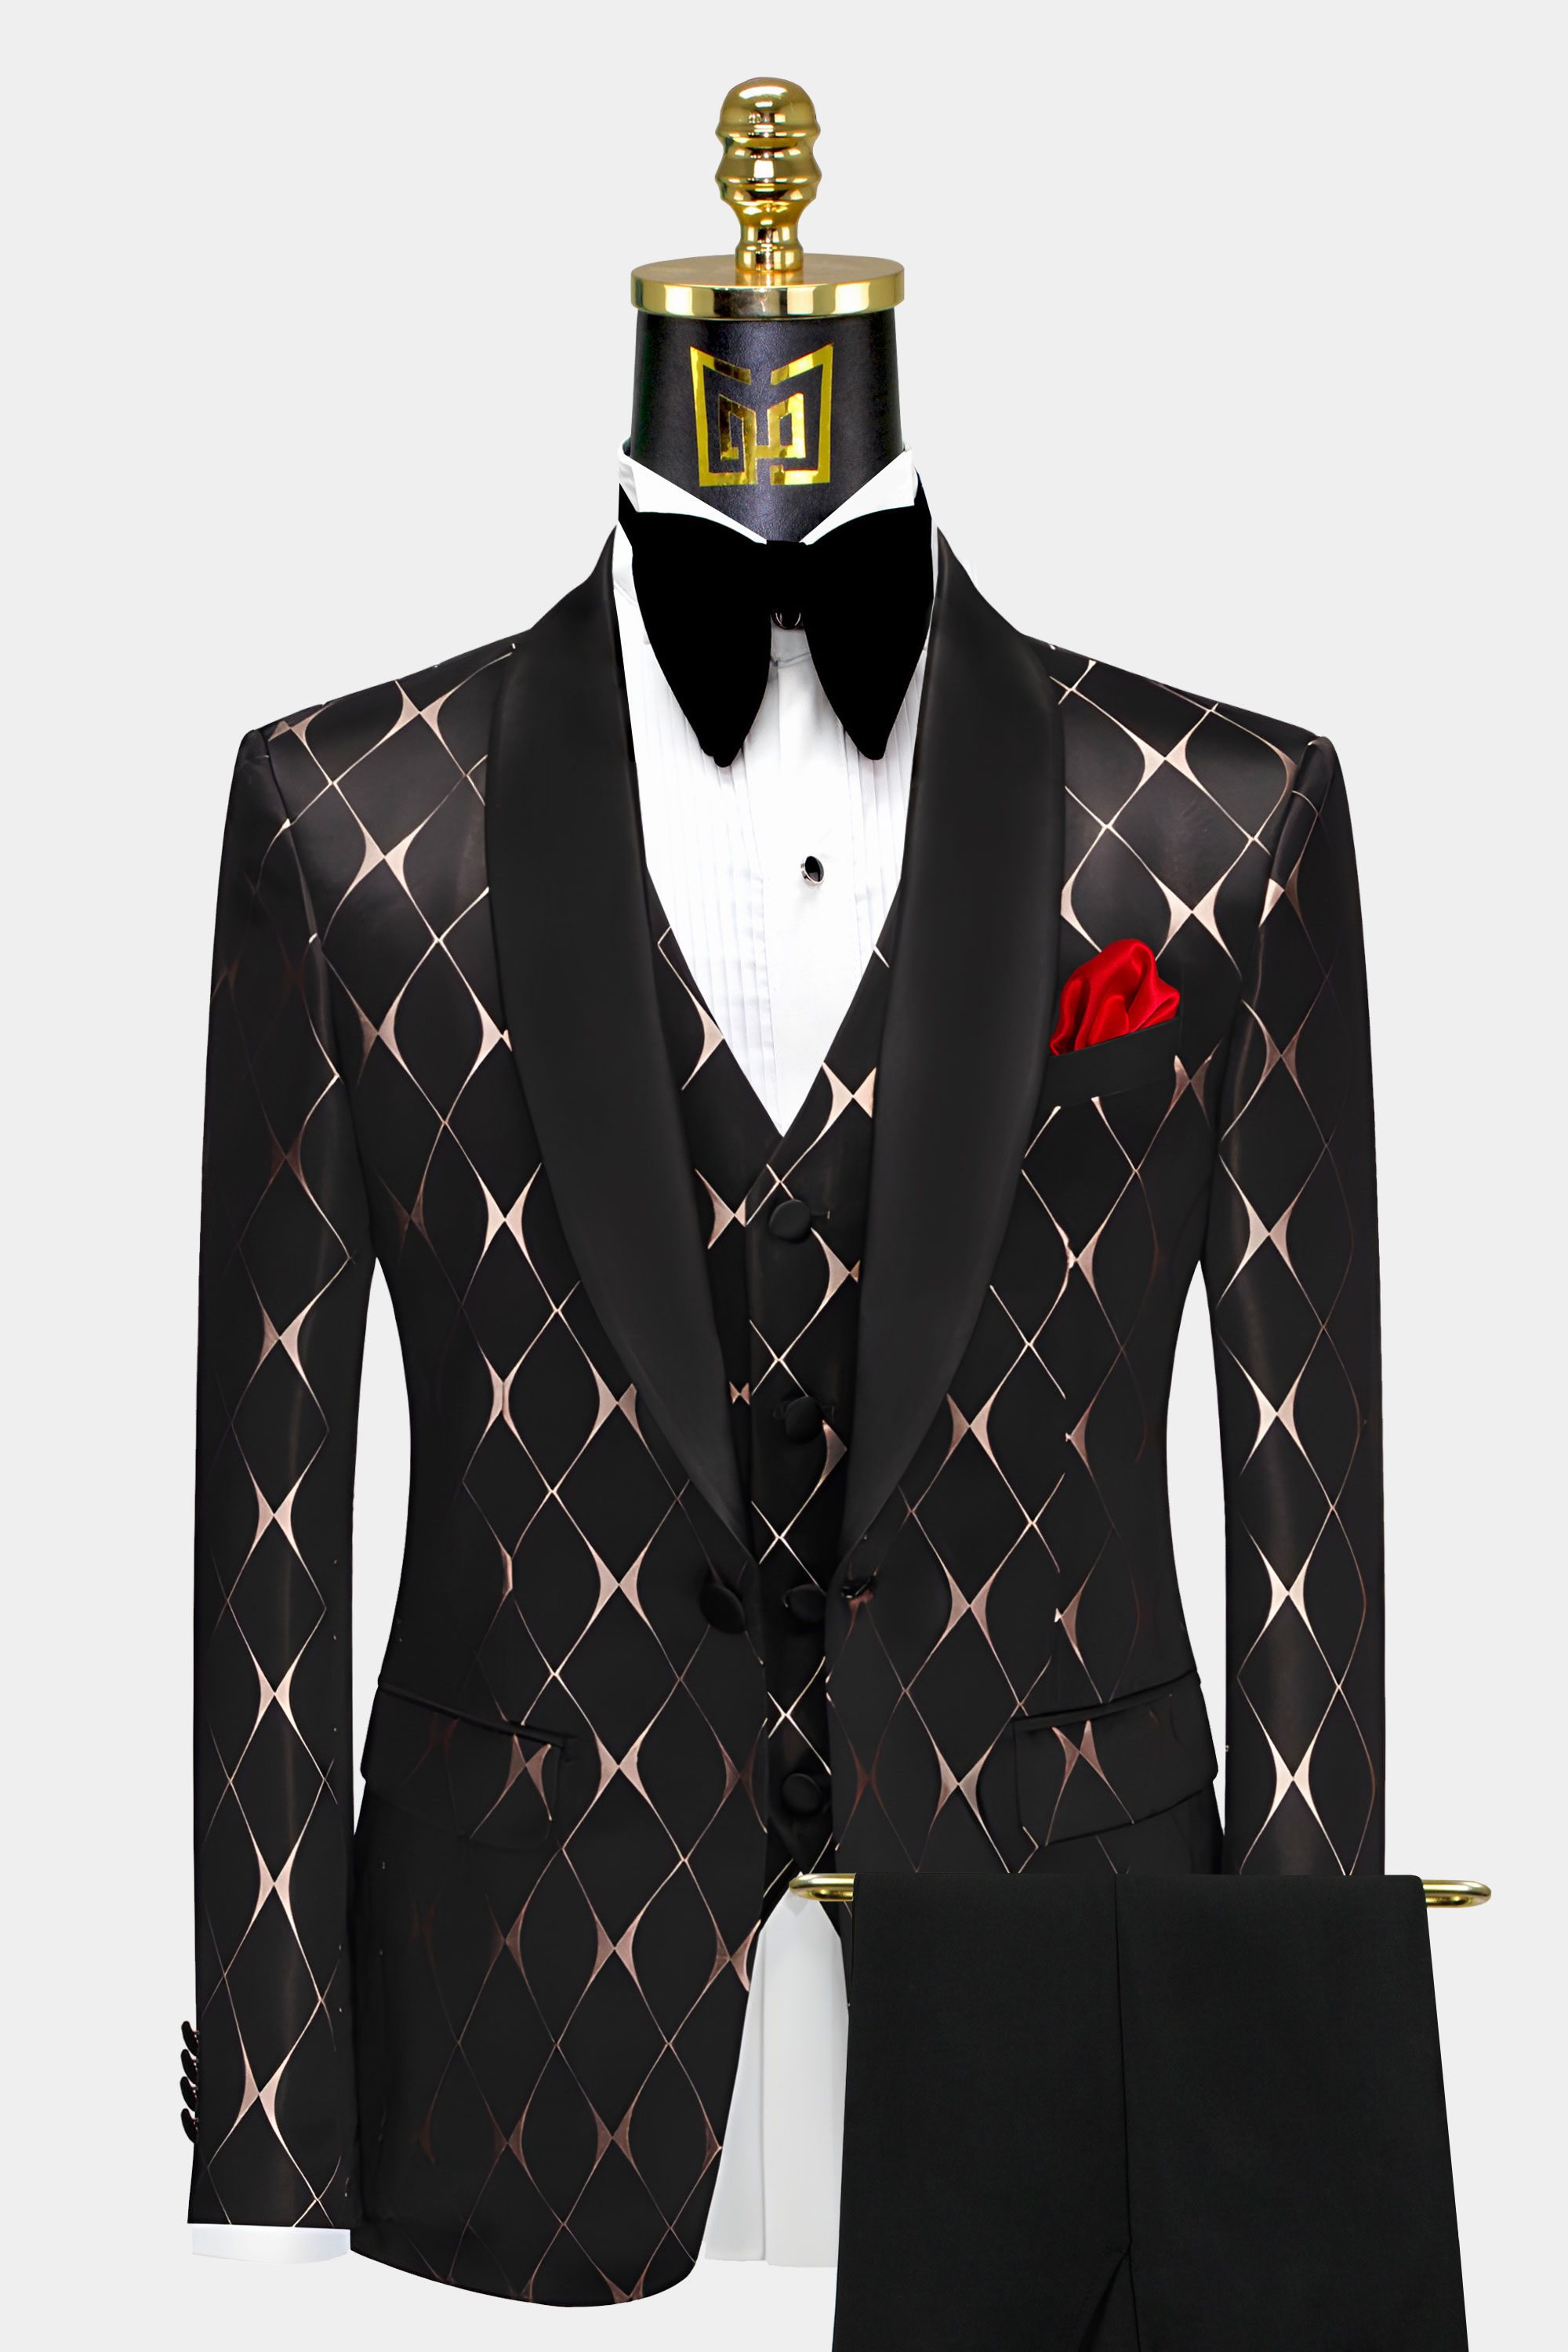 Black-and-Rose-Gold-Wedding-Groom-Suit-from-Gentlemansguru.com